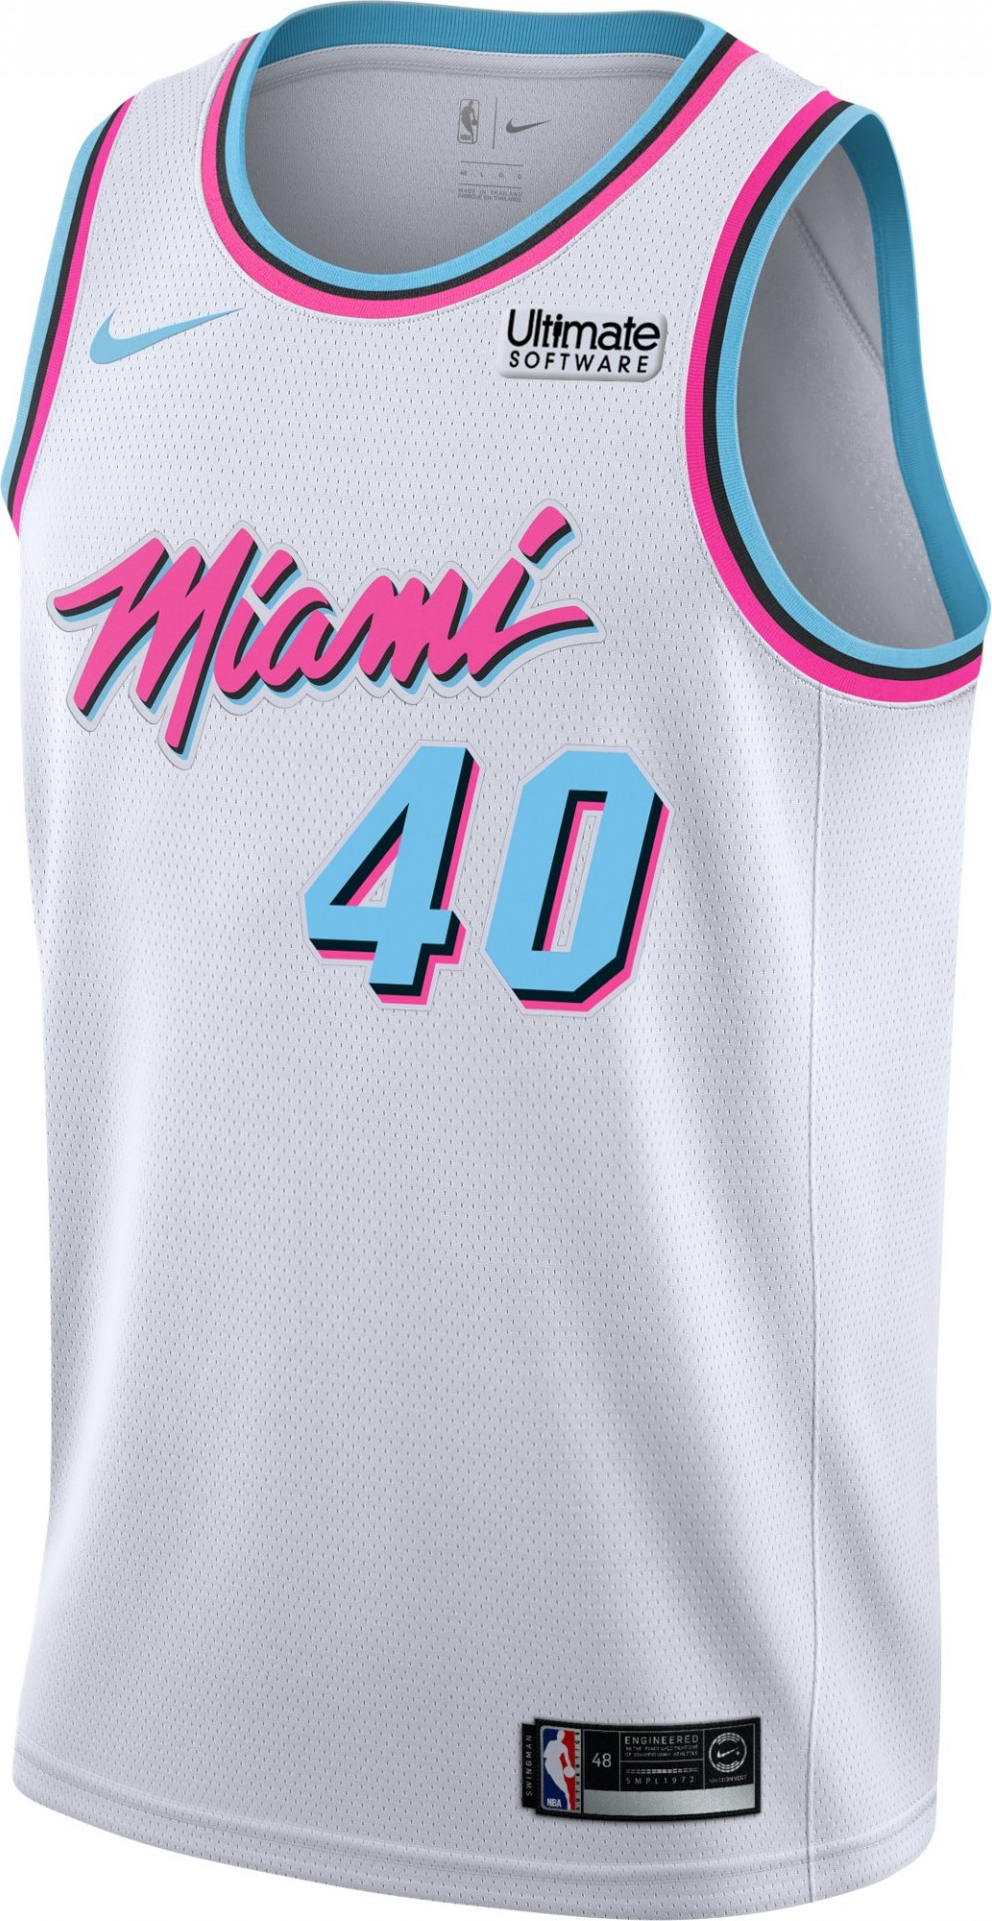 Miami Heat - Miami Vice styled logo 